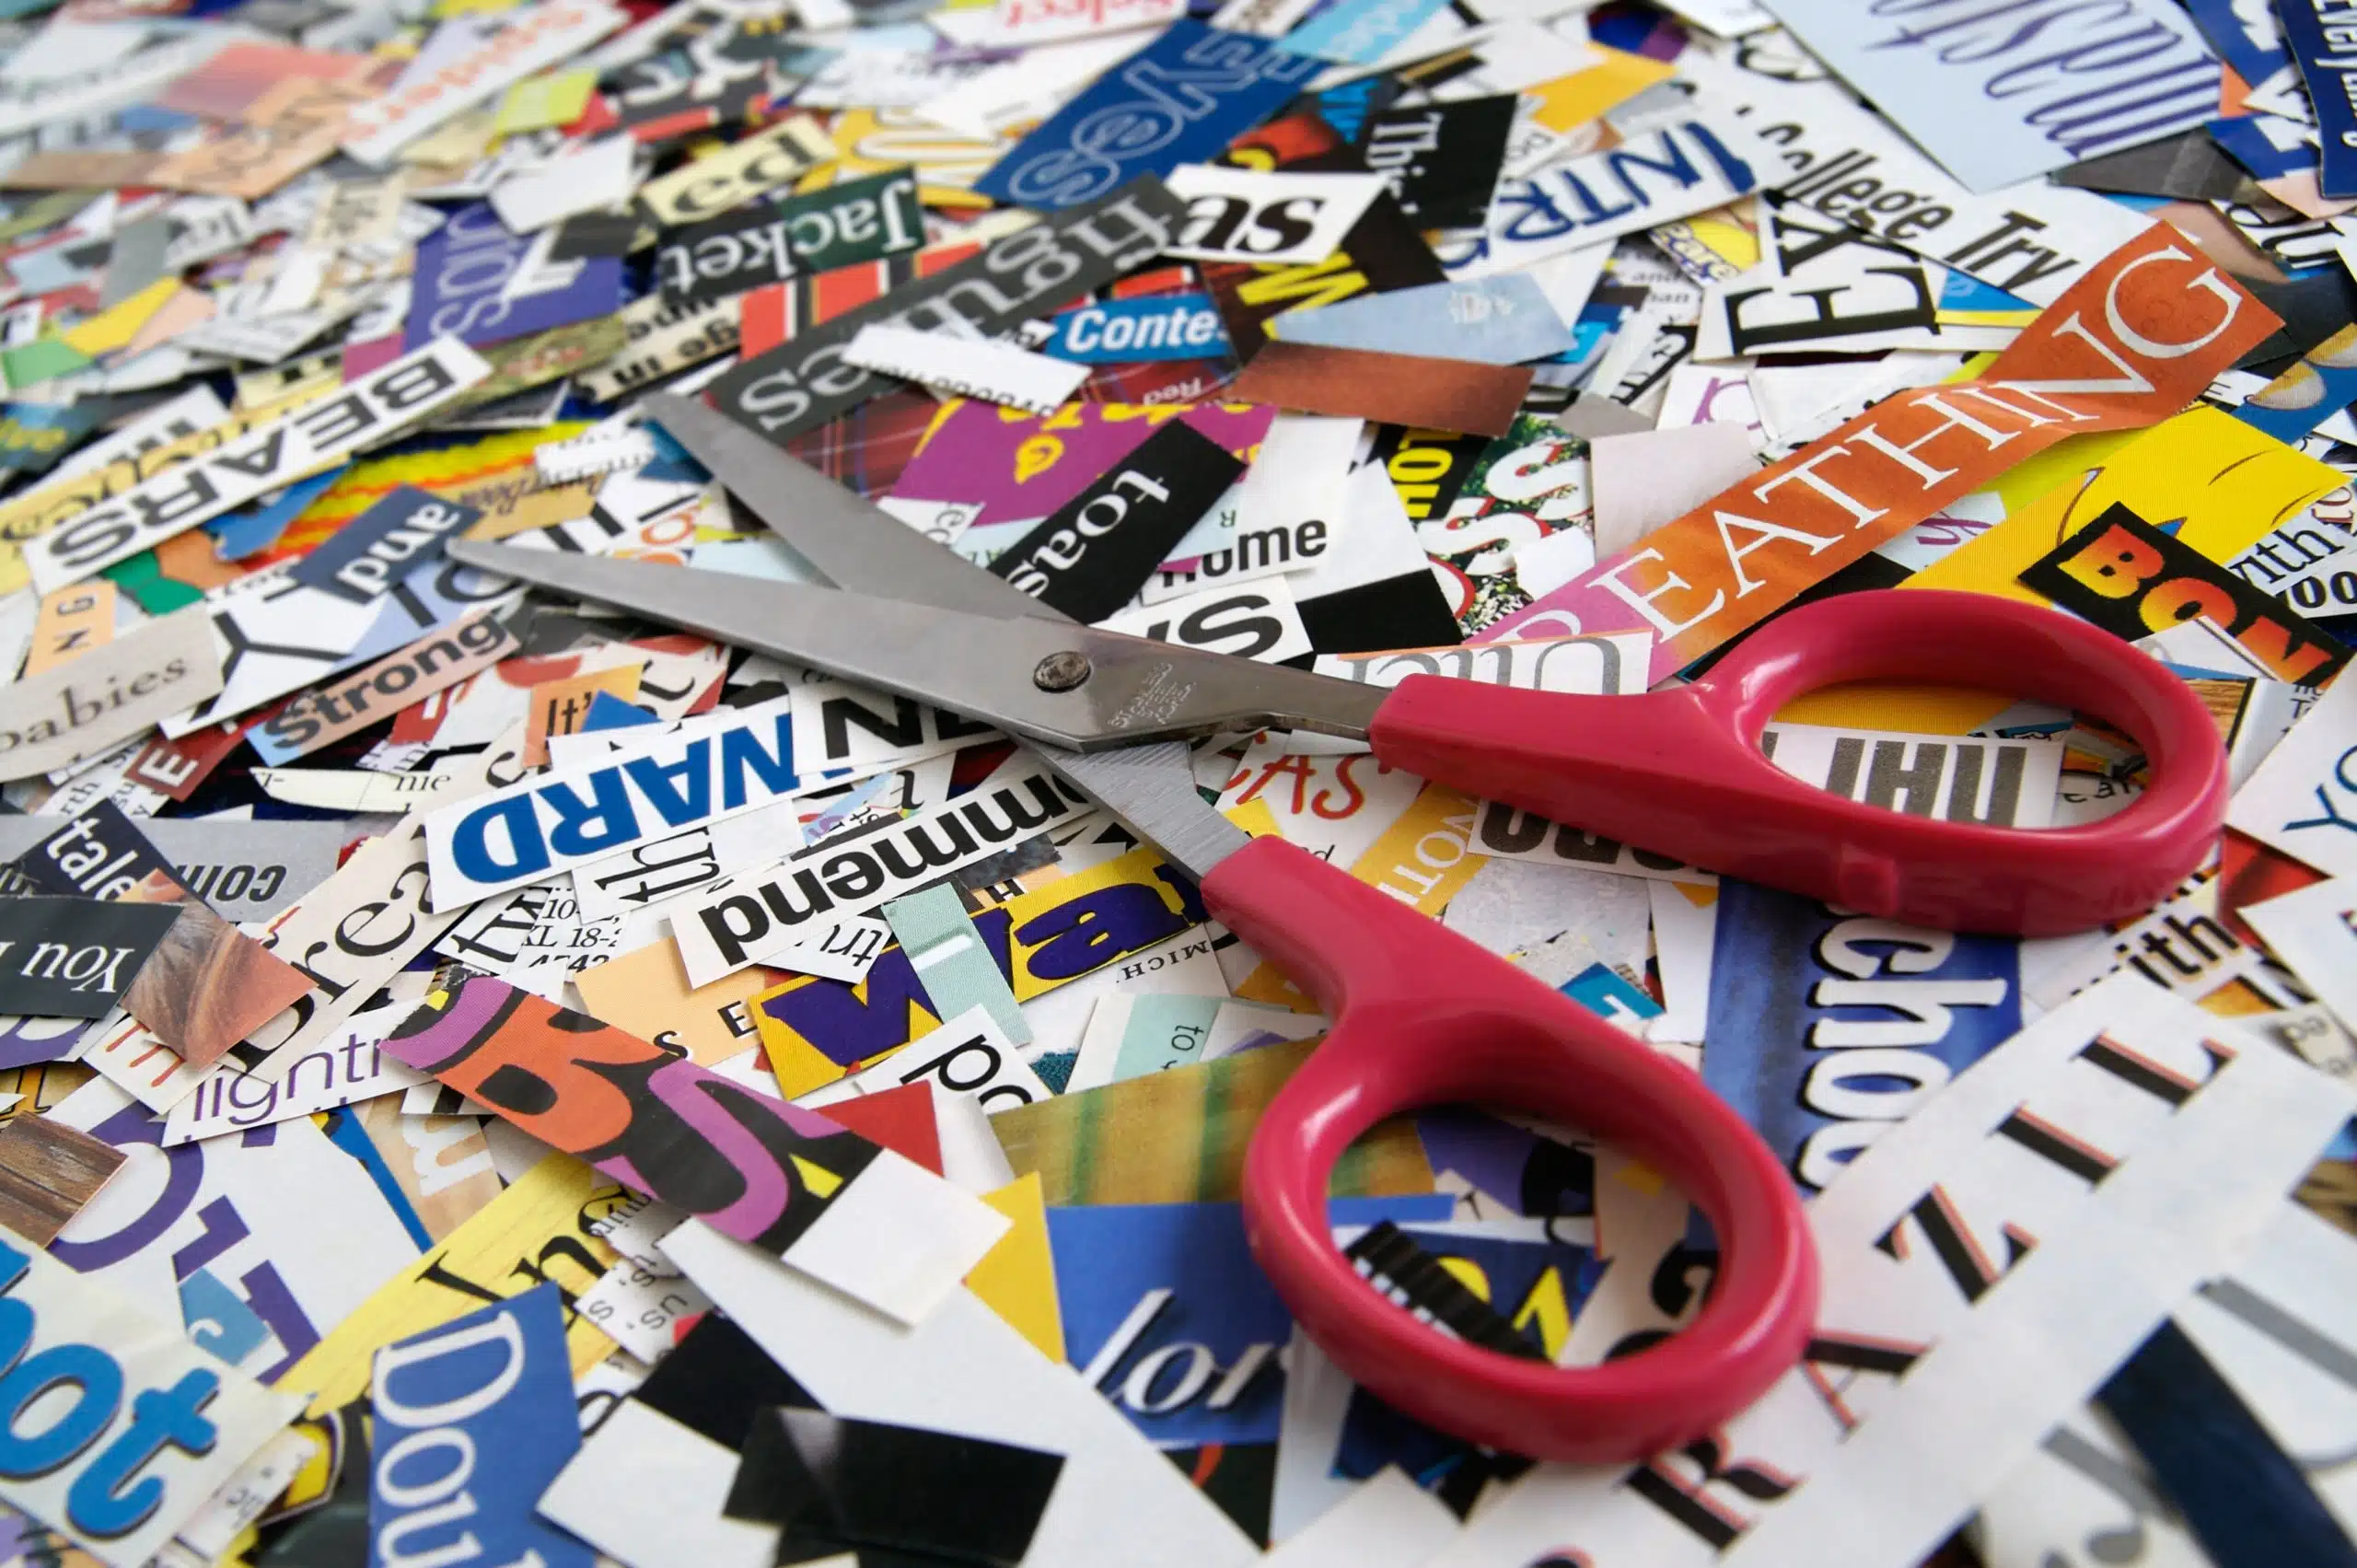 Scissors on magazine clippings.